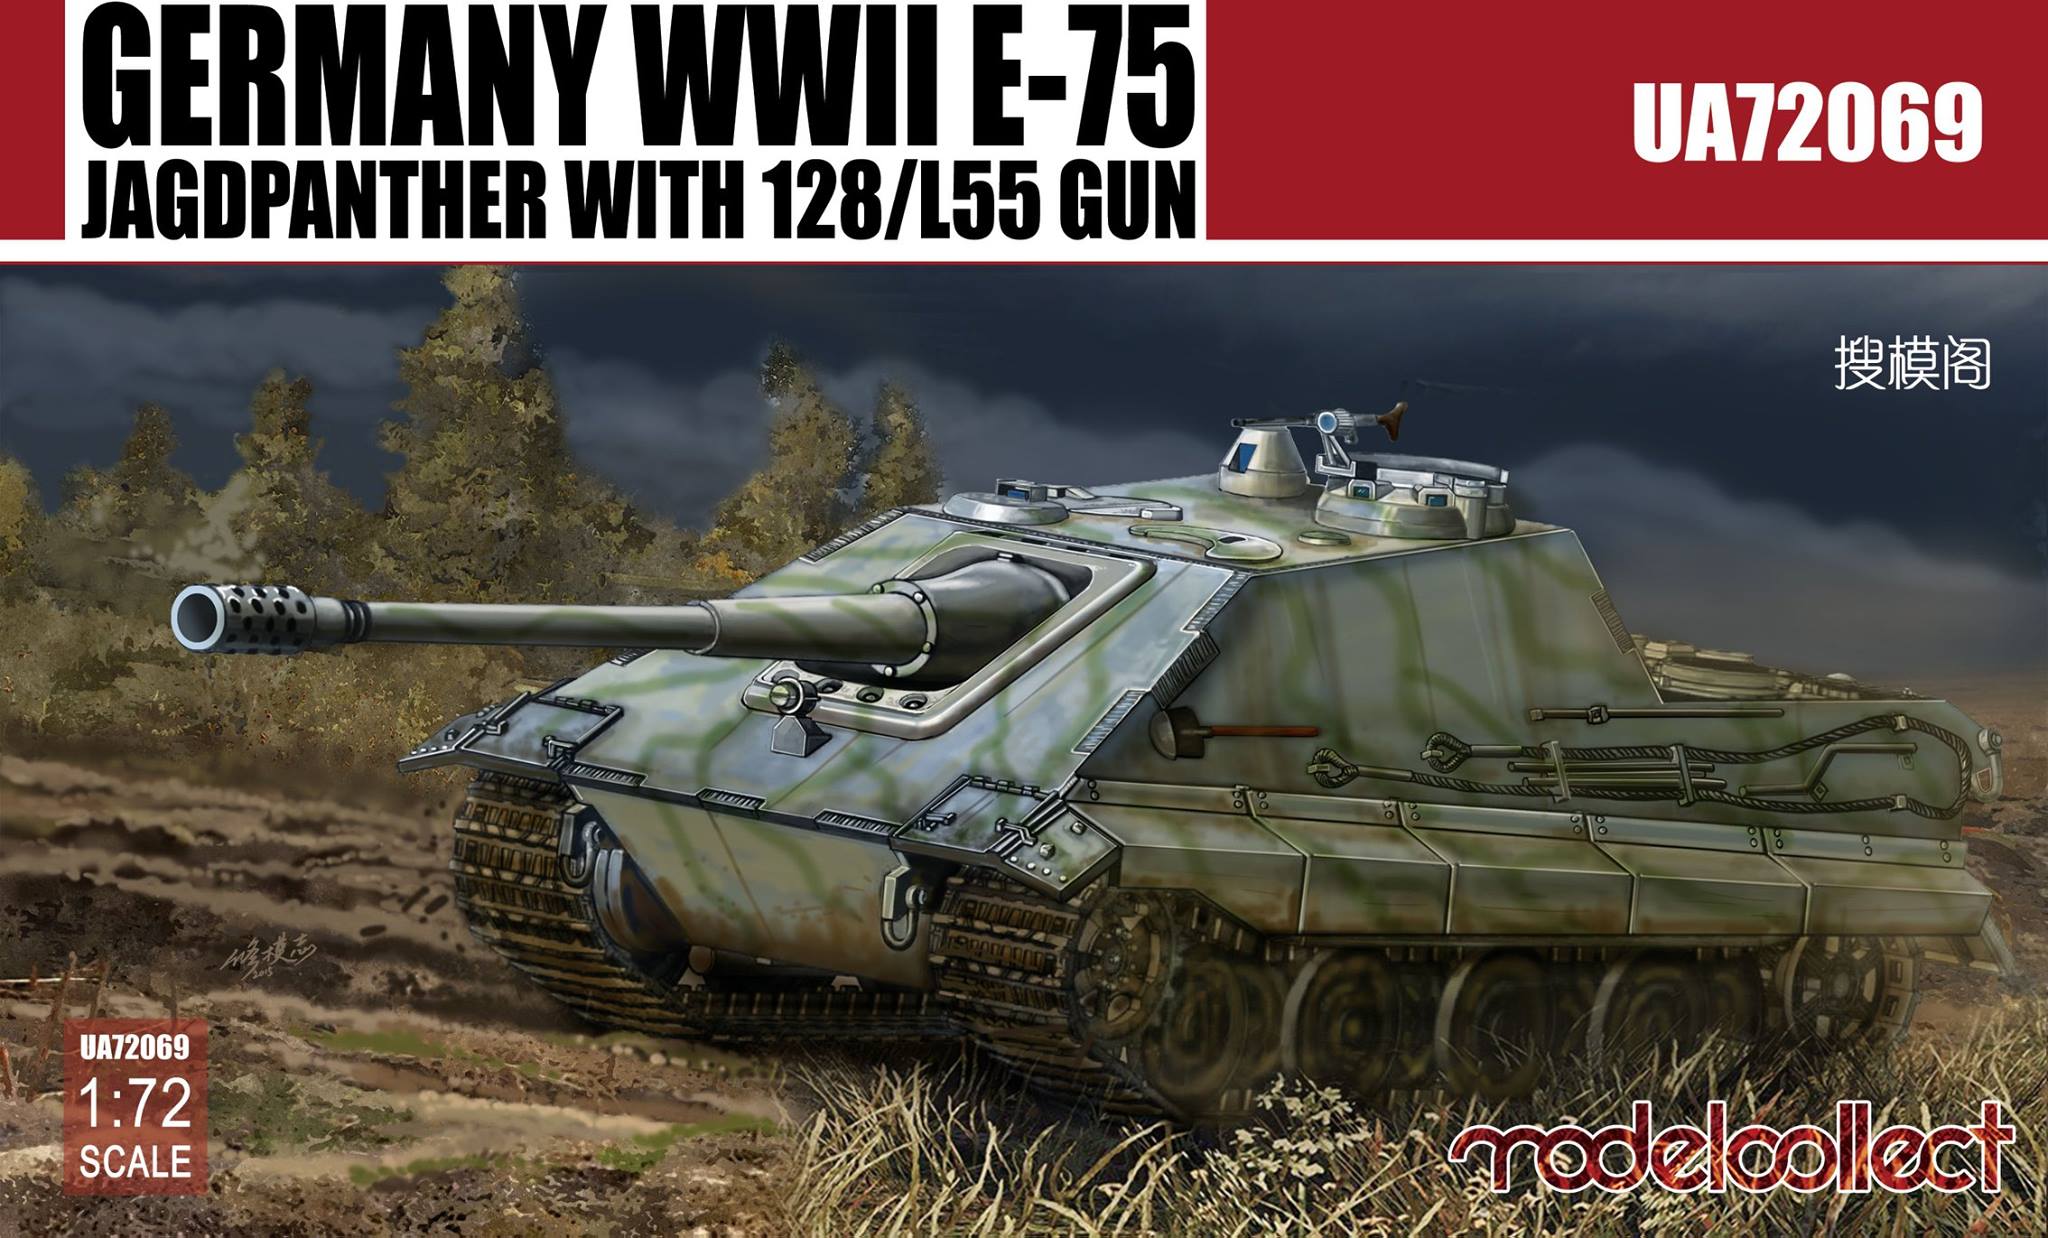 E-75 Jagdpanther with 128cm/L55 gun